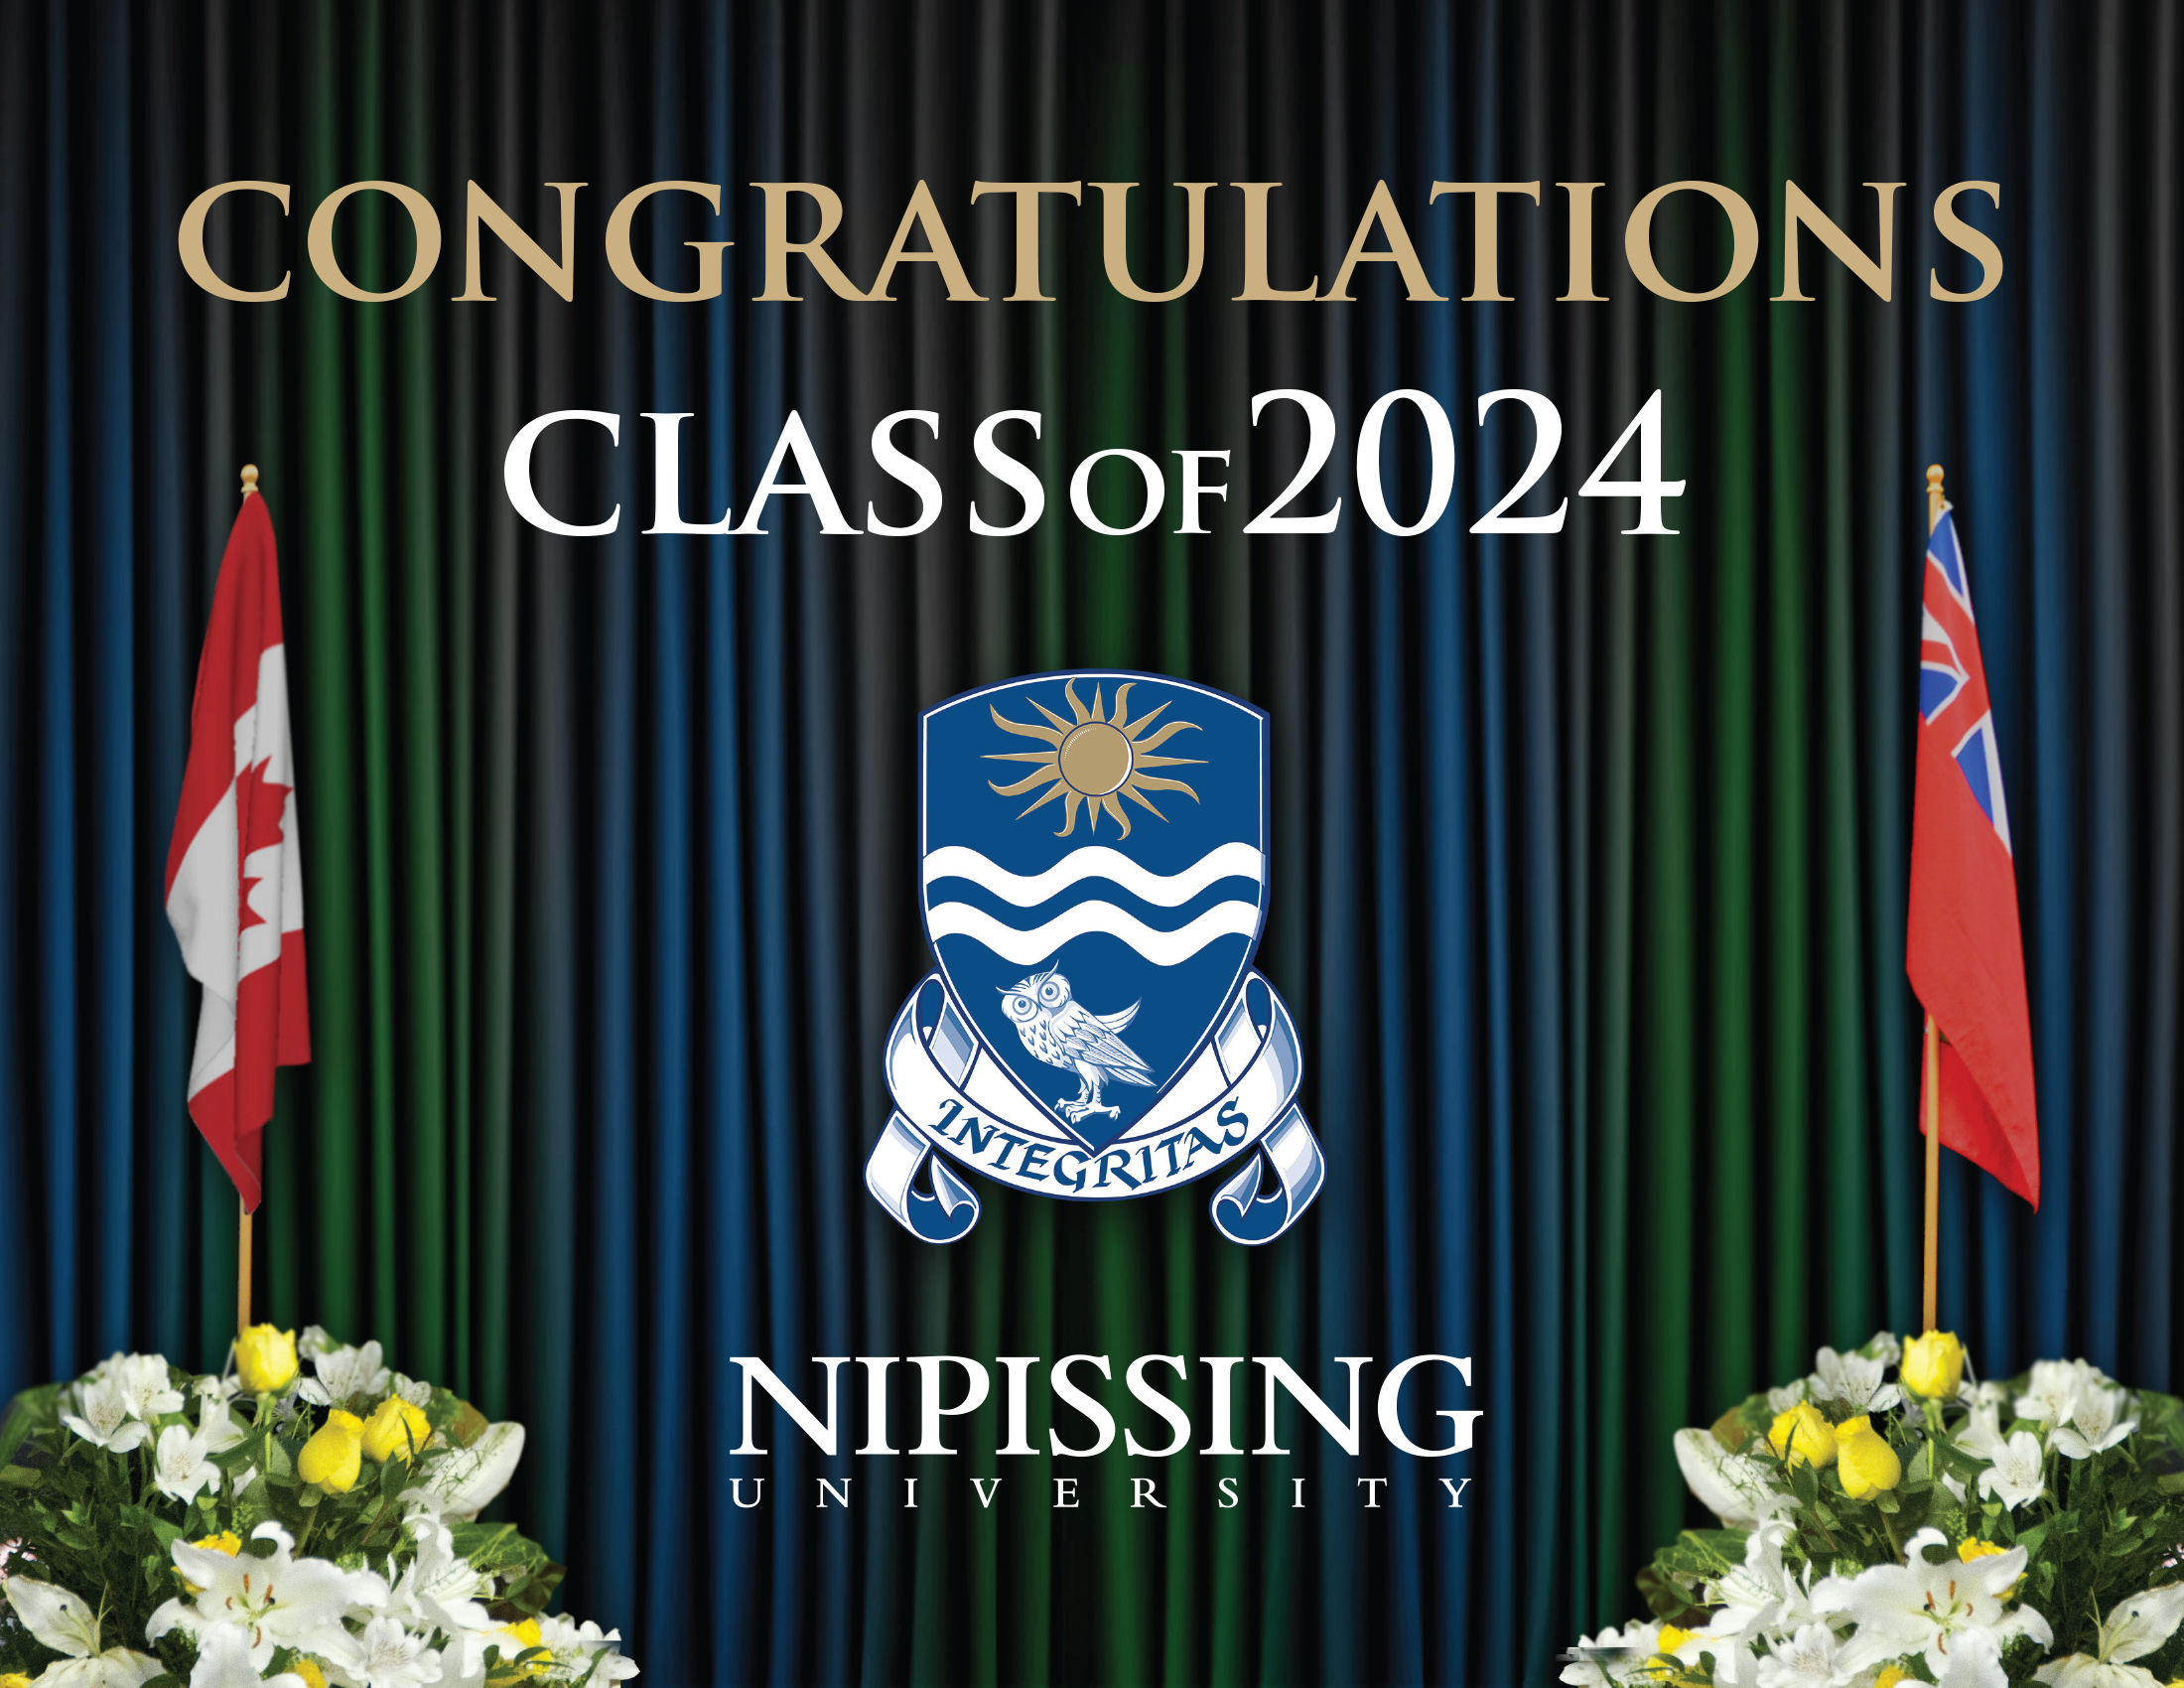 Congratulations Class of 2024 sign